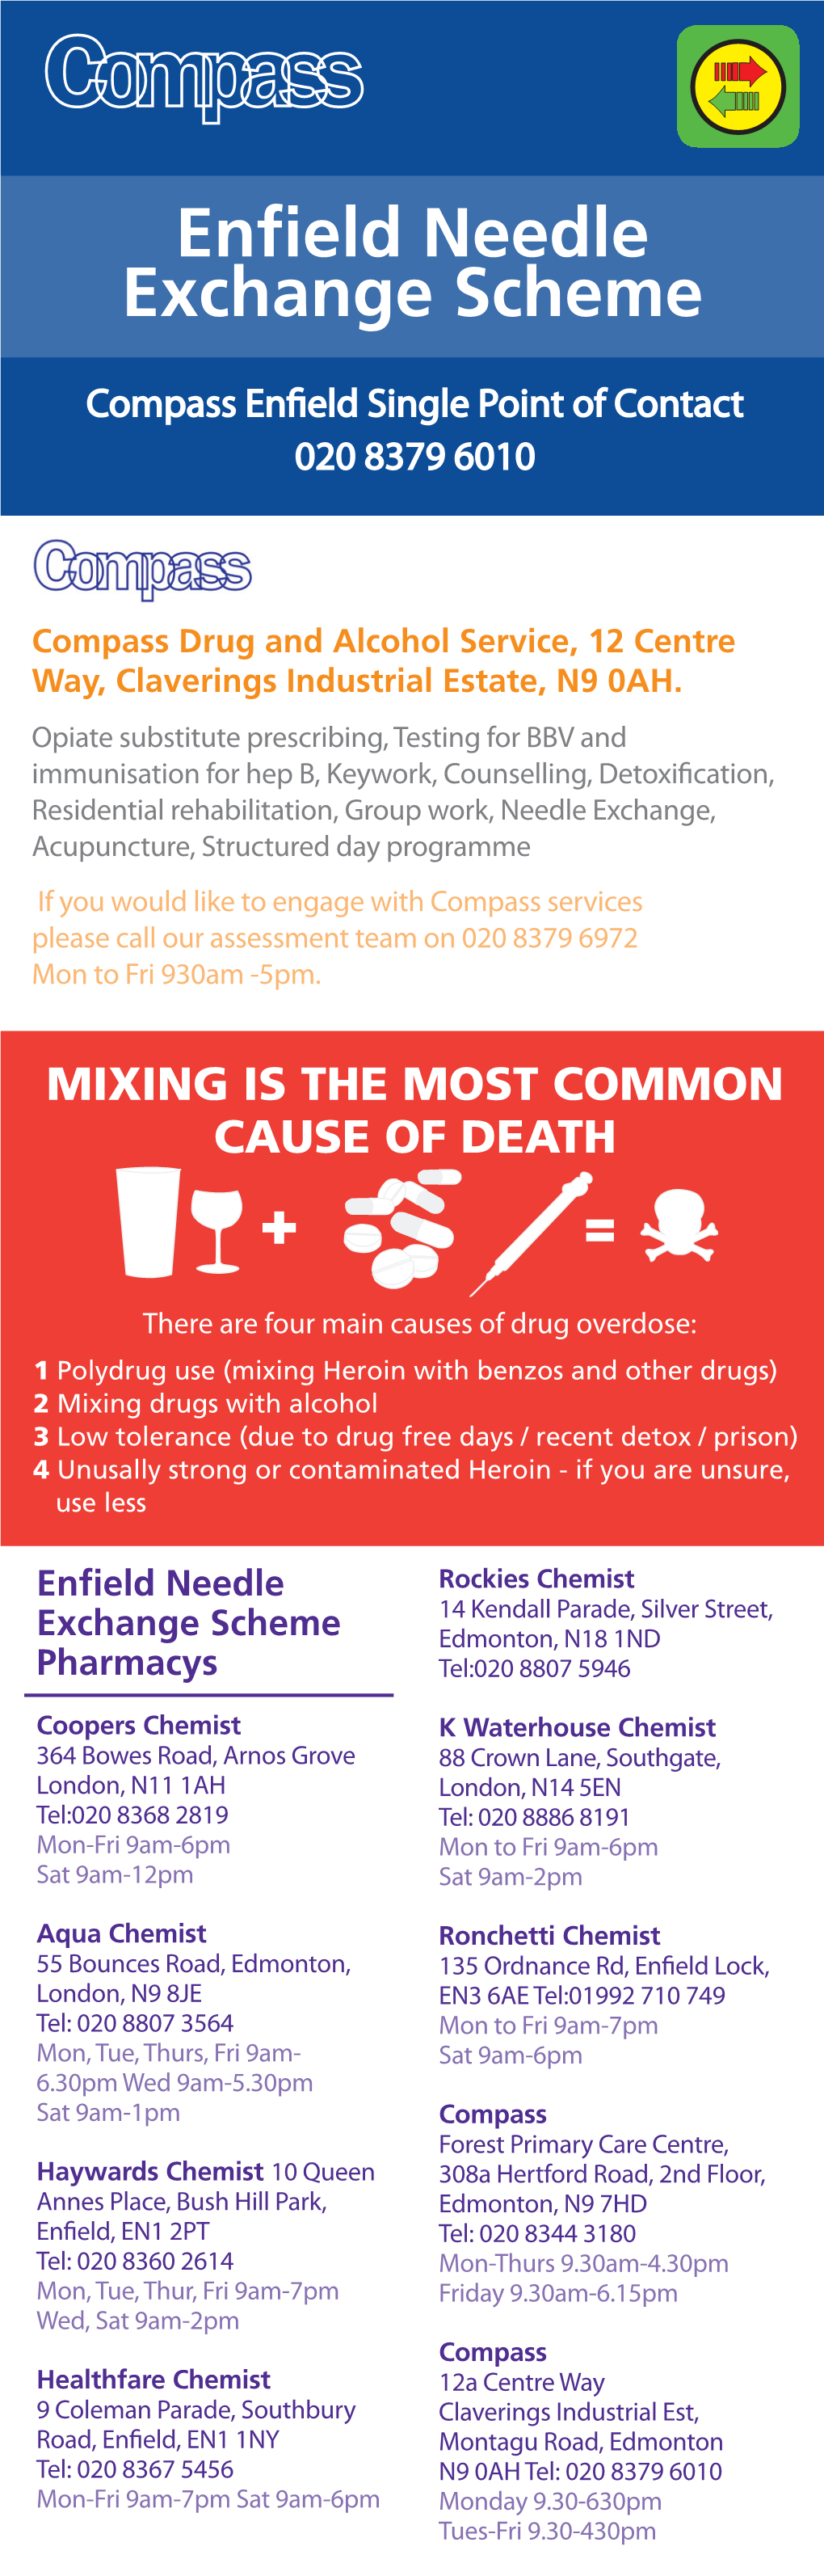 Enfield Needle Exchange Scheme